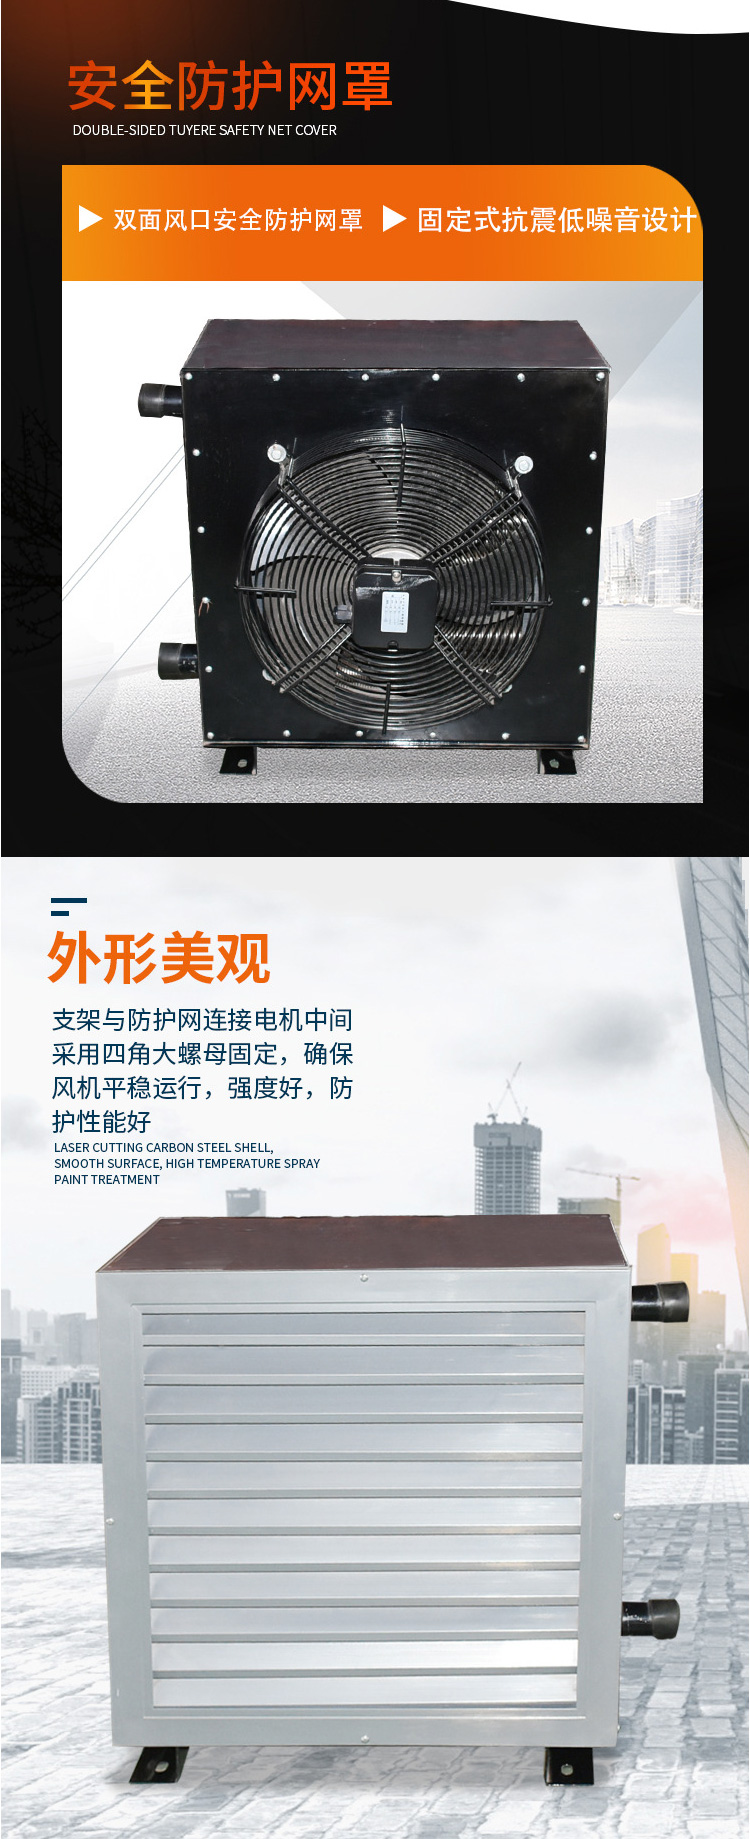 4Q-5Q-7Q-8Q蒸汽型暖风机工作原理/暖风机安装使用/维护